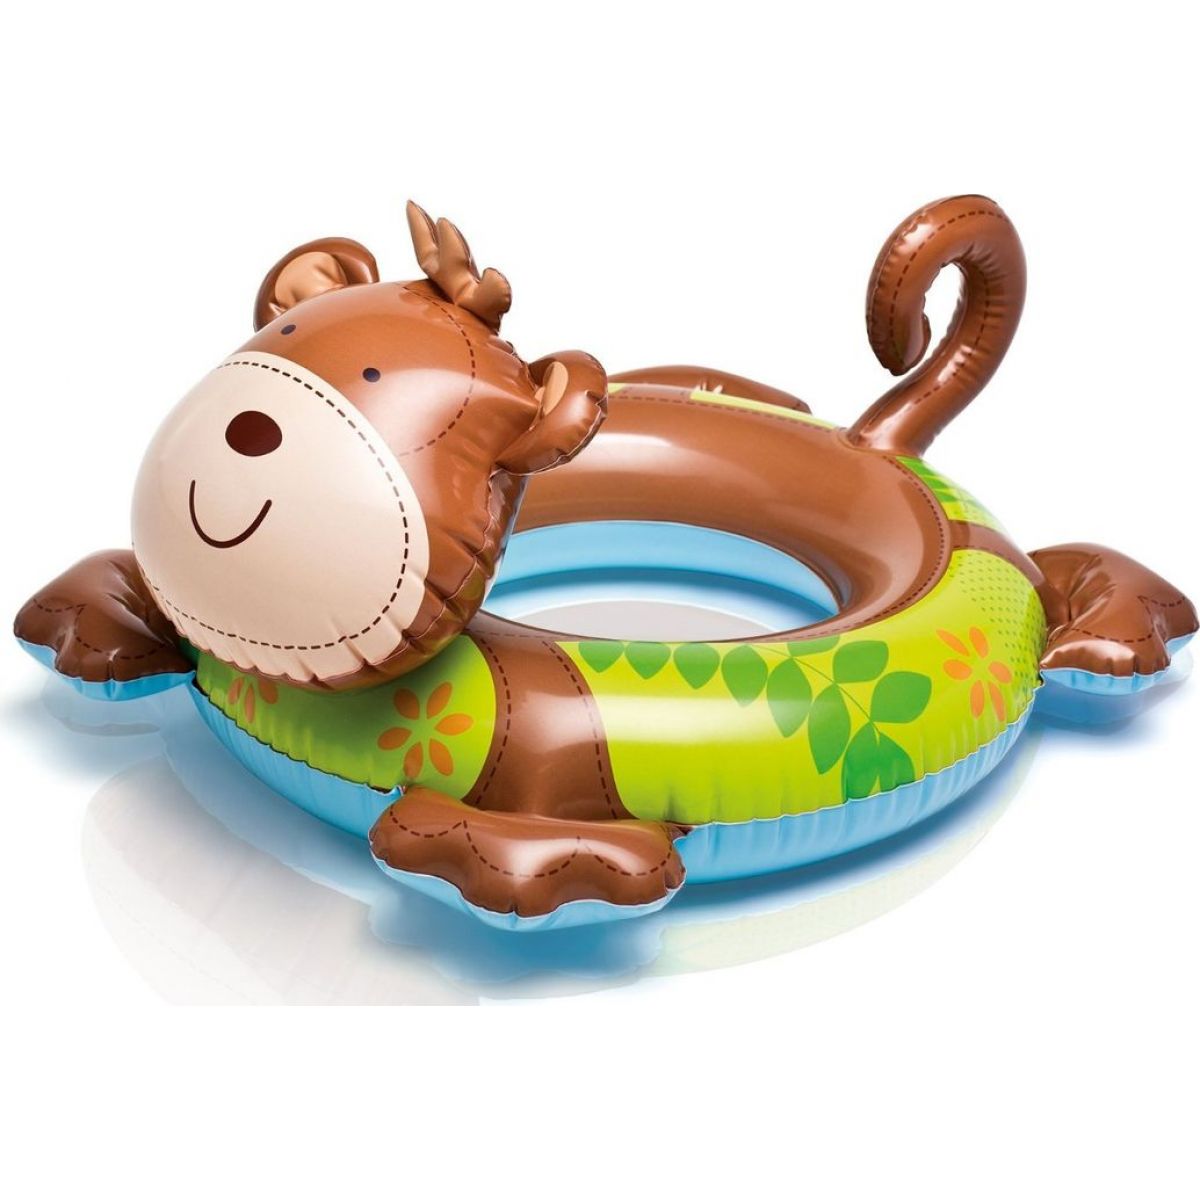 Plavací kruh Zvířátka Intex 58221 - Opička